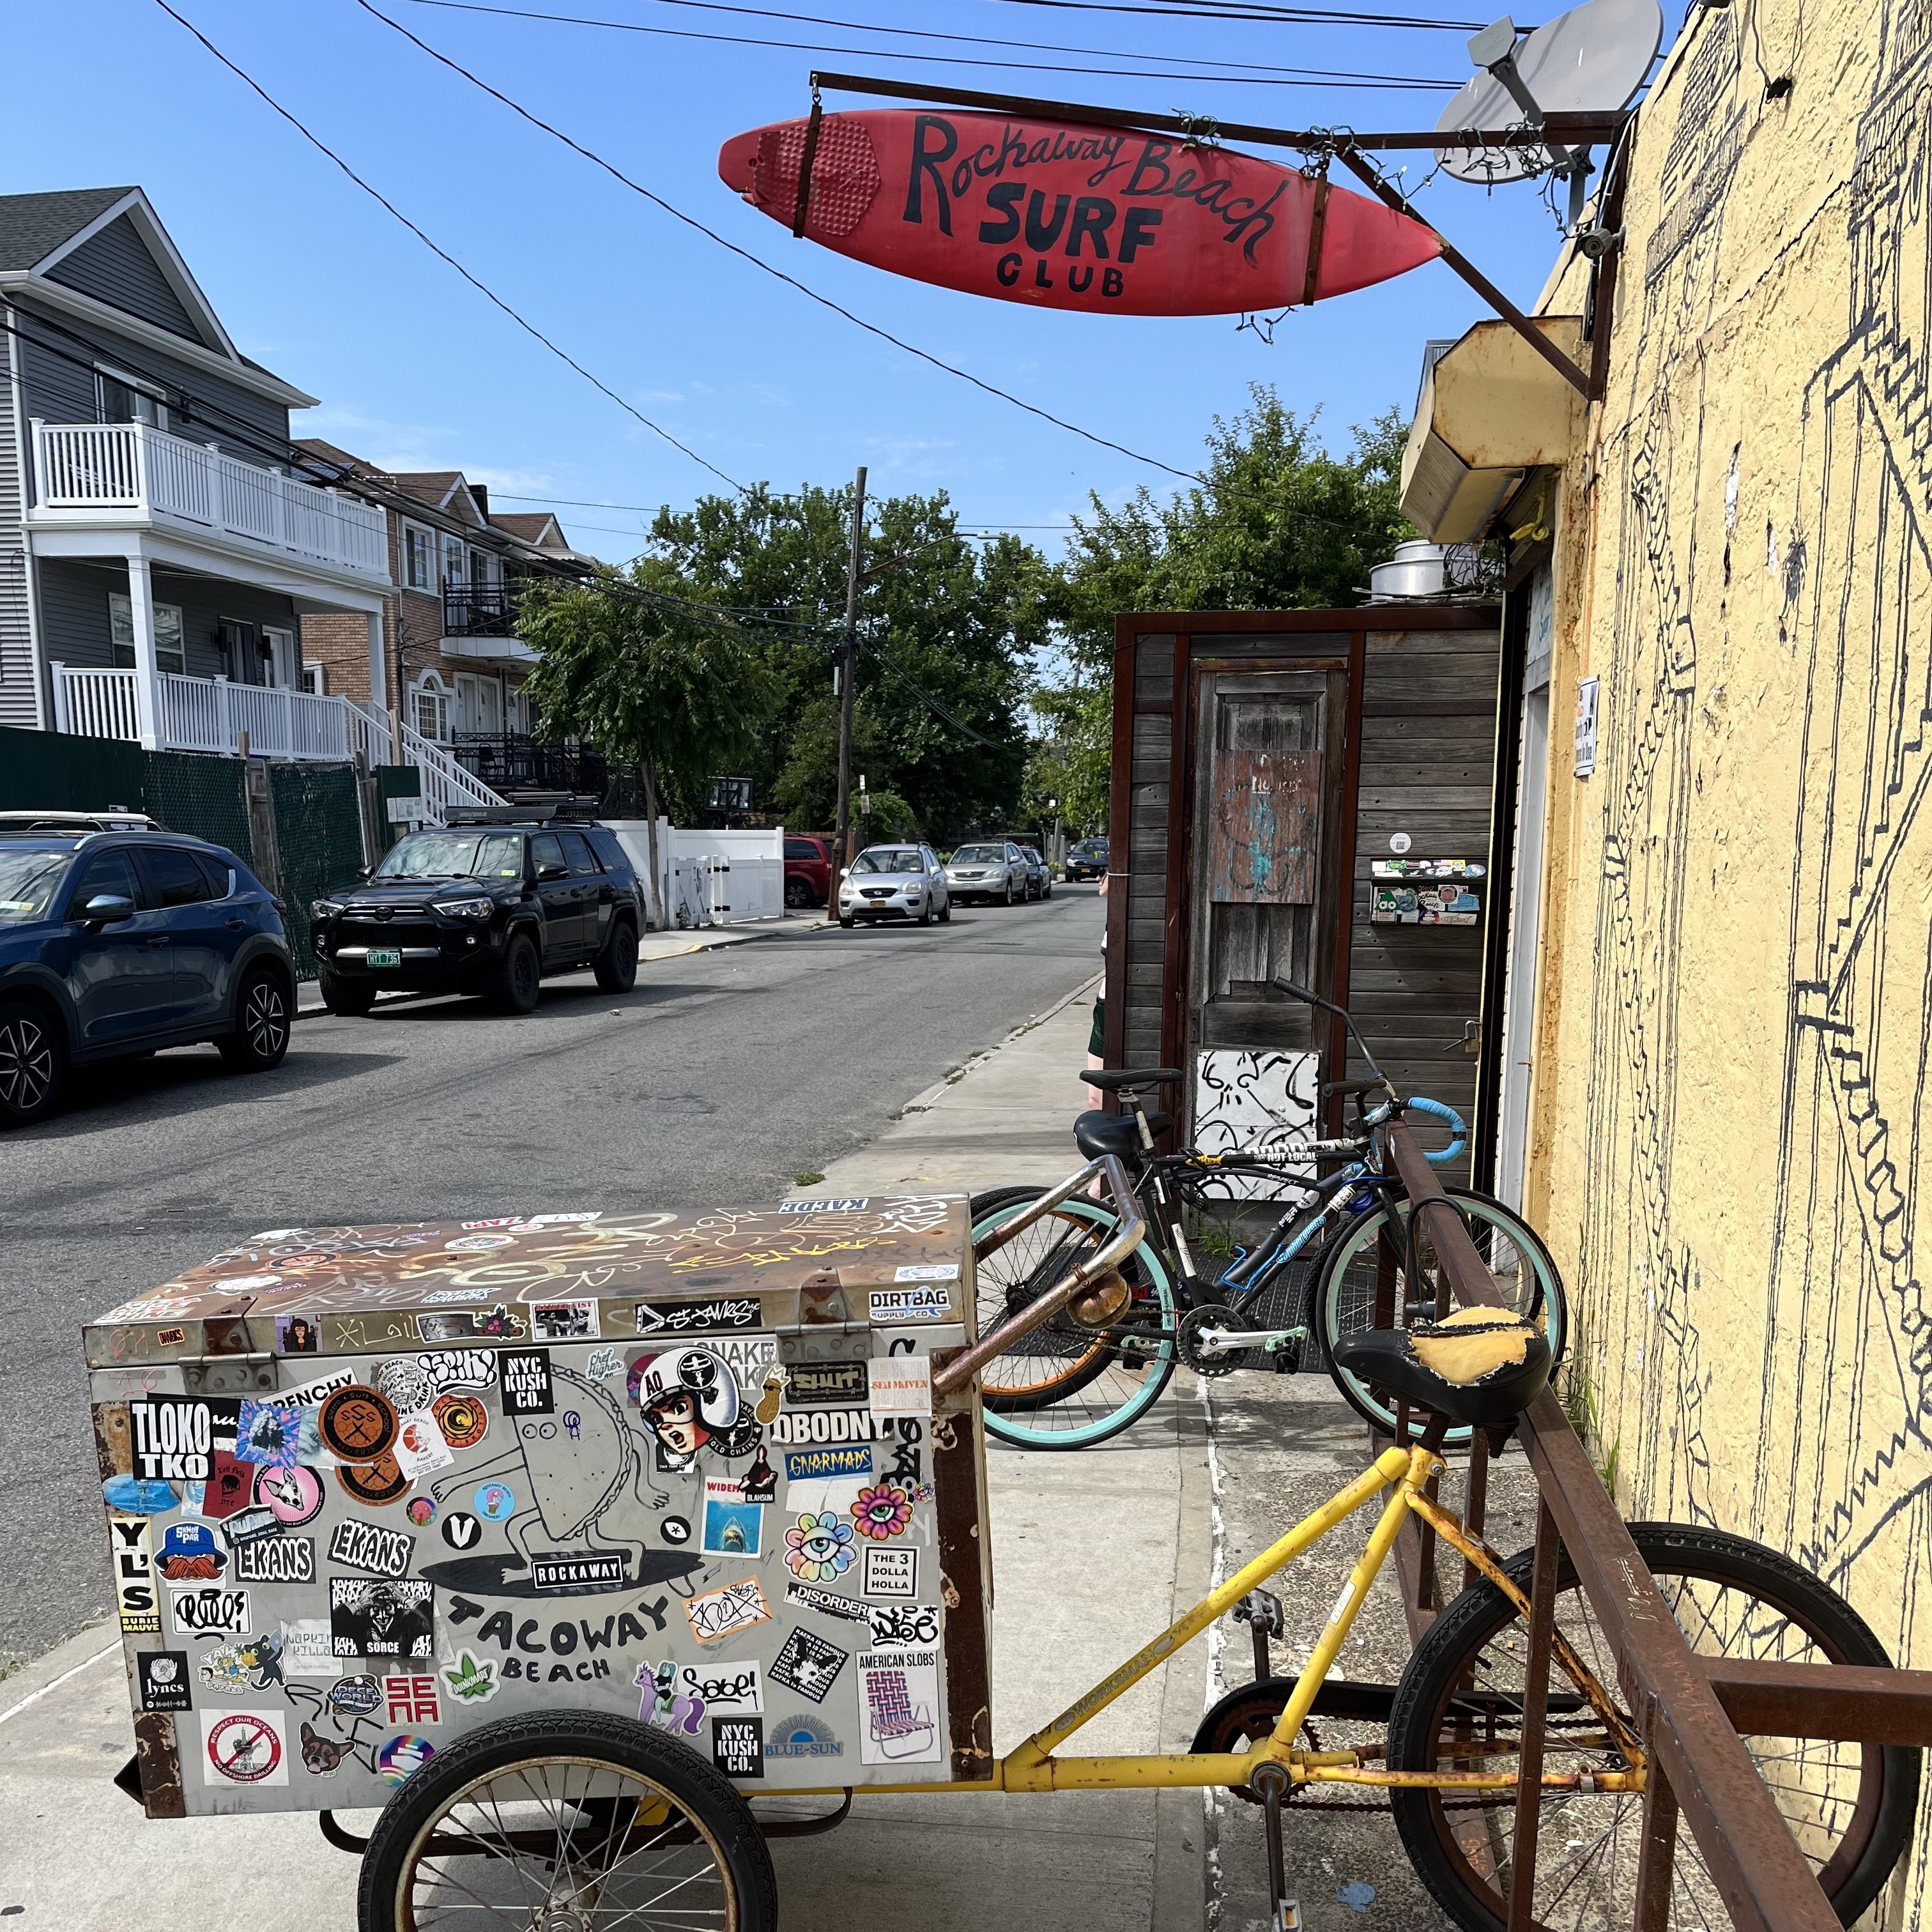 Tacoway Beach bike in front of Rockaway Beach Surf Club. Beach 87th Street, Rockaway Beach, New York